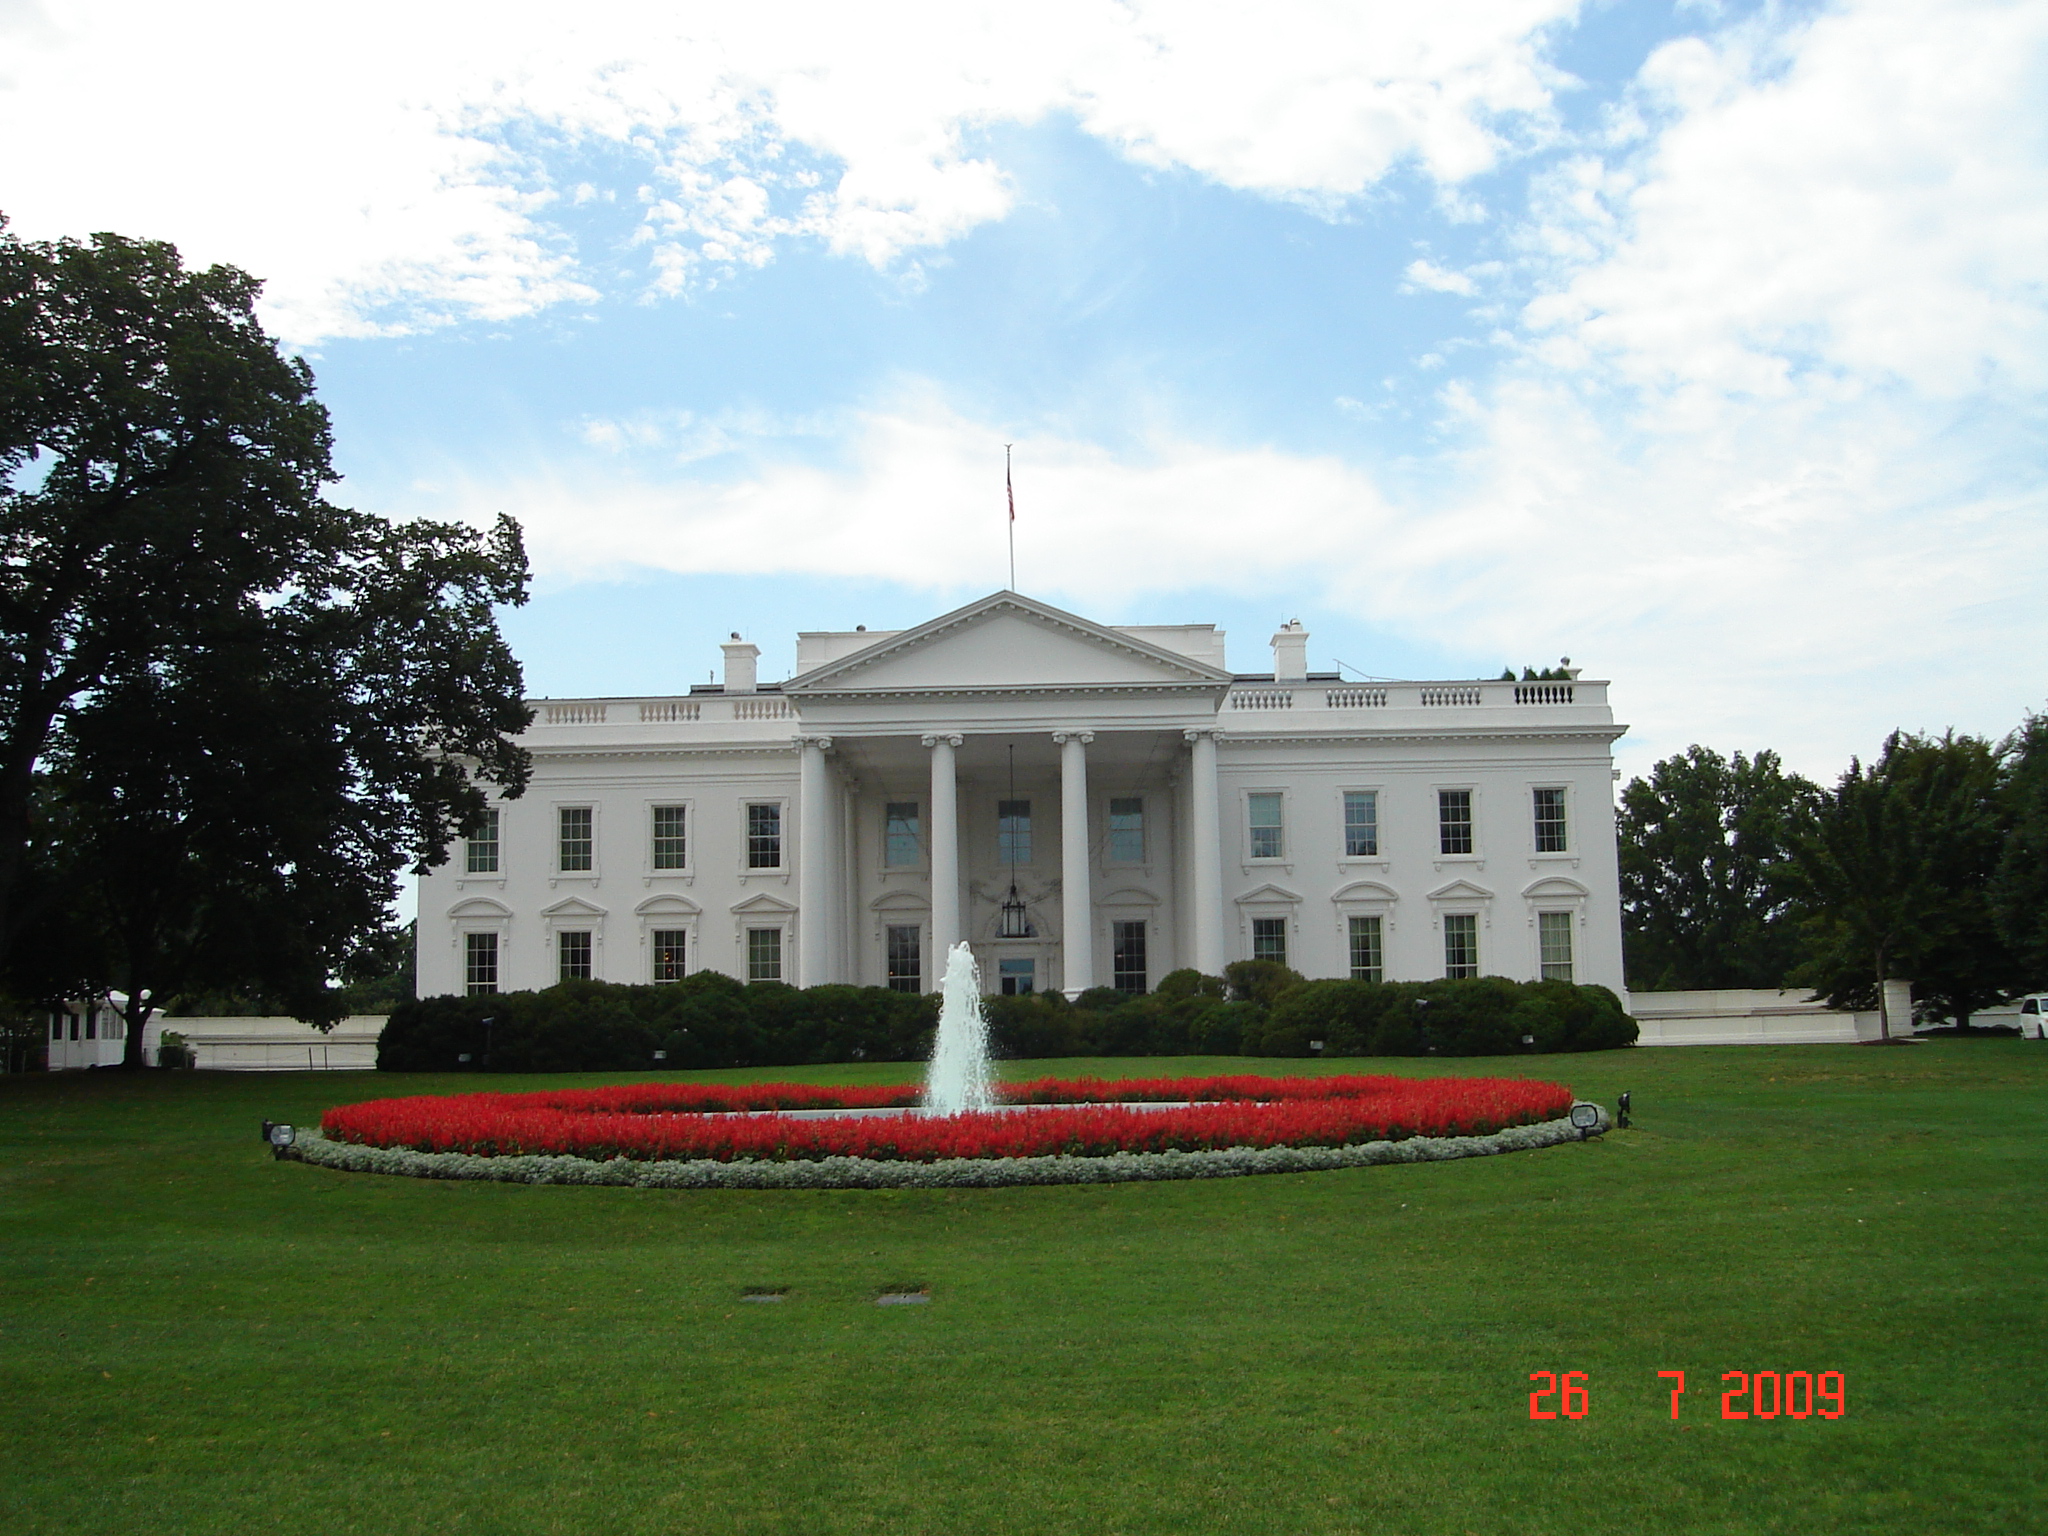 Maison Blanche